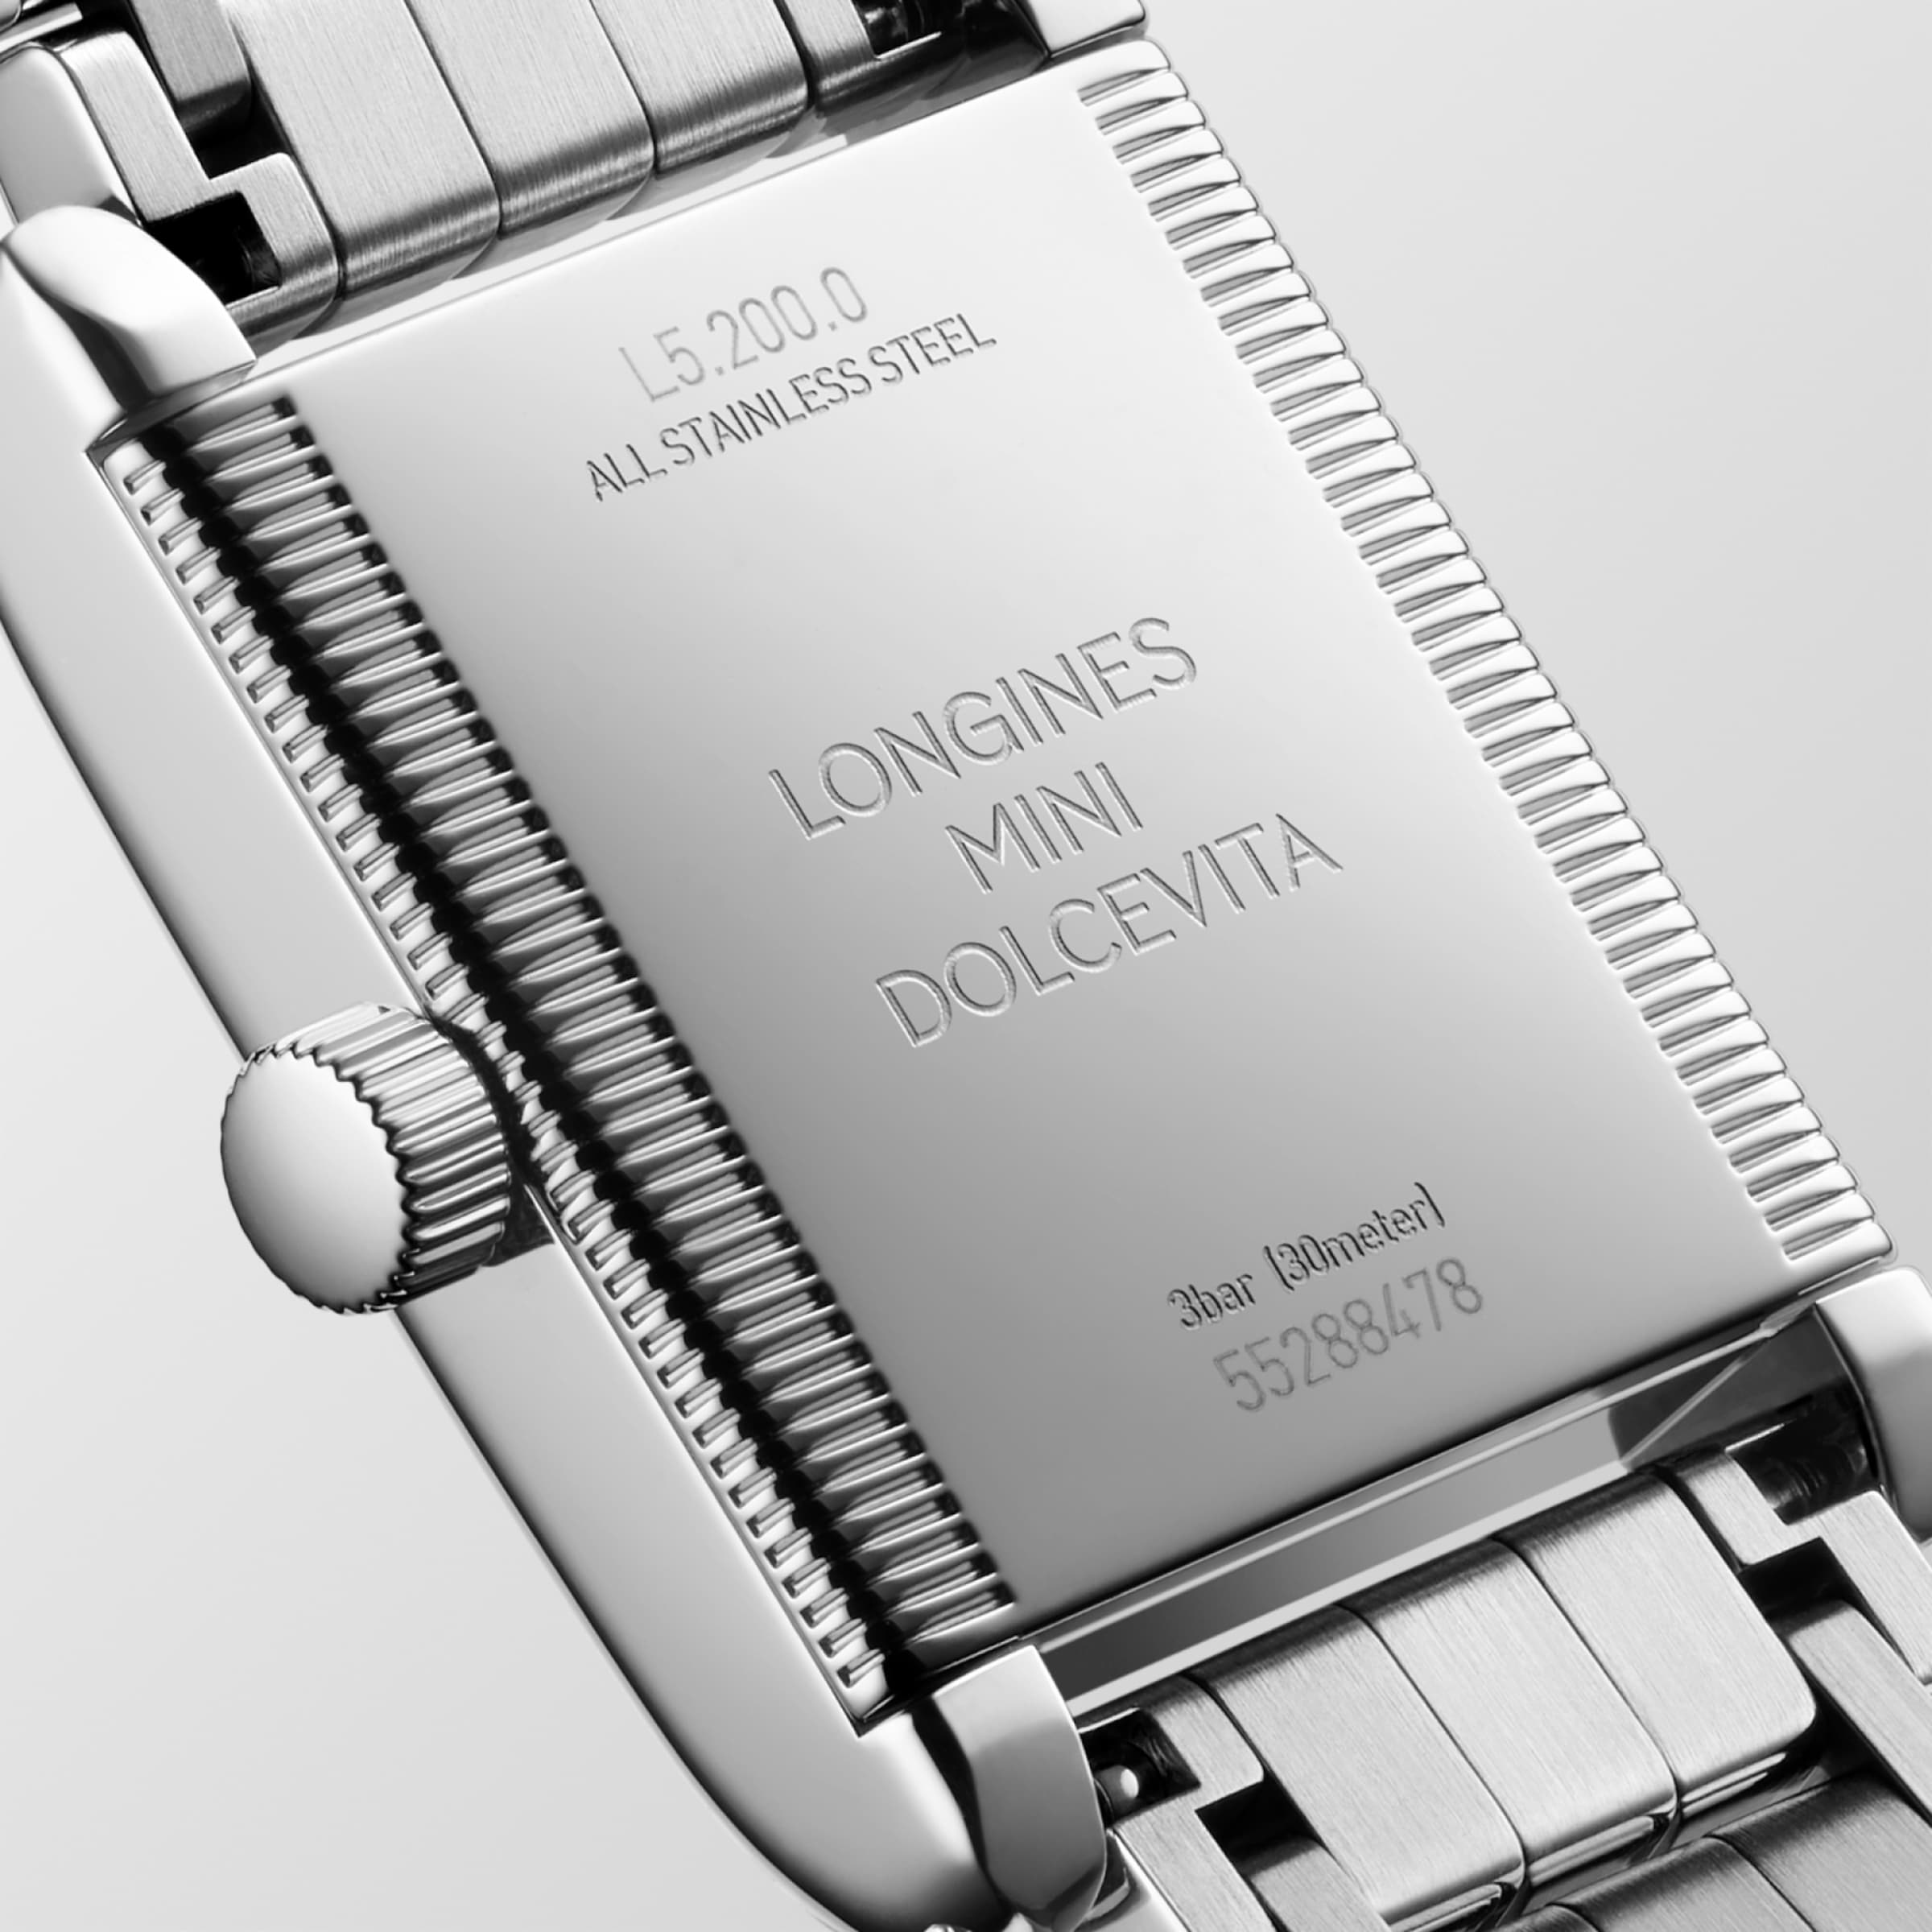 Longines MINI DOLCEVITA Quartz Stainless steel Watch - L5.200.0.71.6